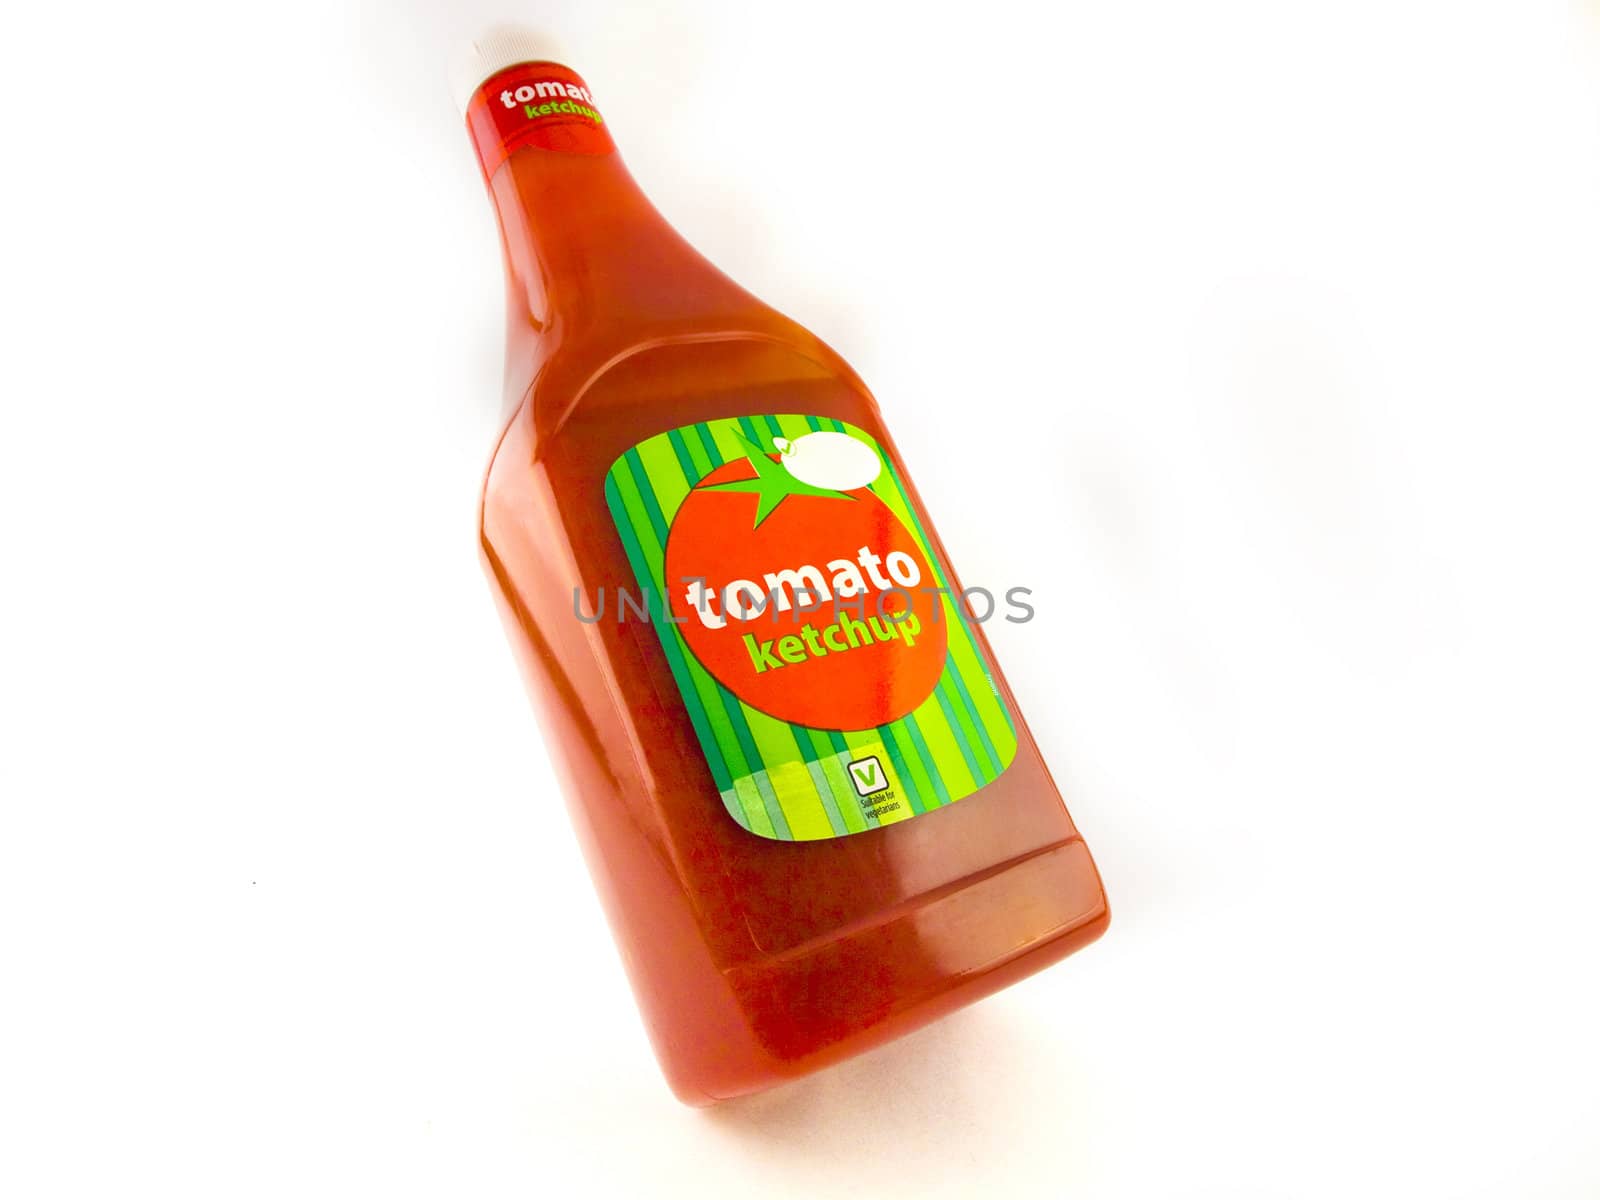 Large Bottle of Tomato Ketchup on White Background